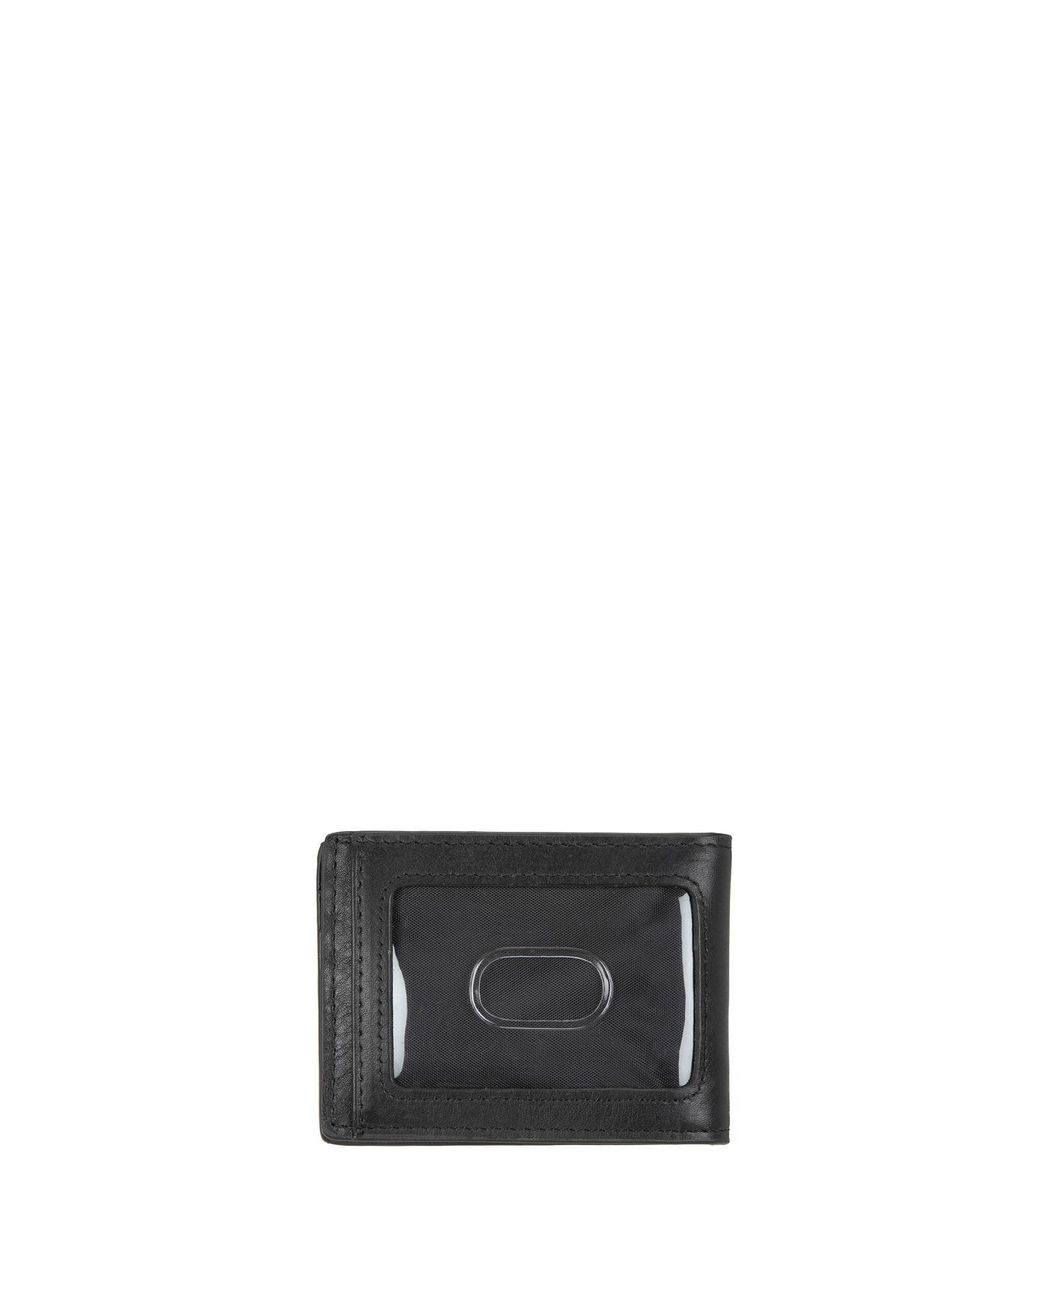 Wilsons Leather Rustler Front Pocket Leather Wallet in Brown for Men